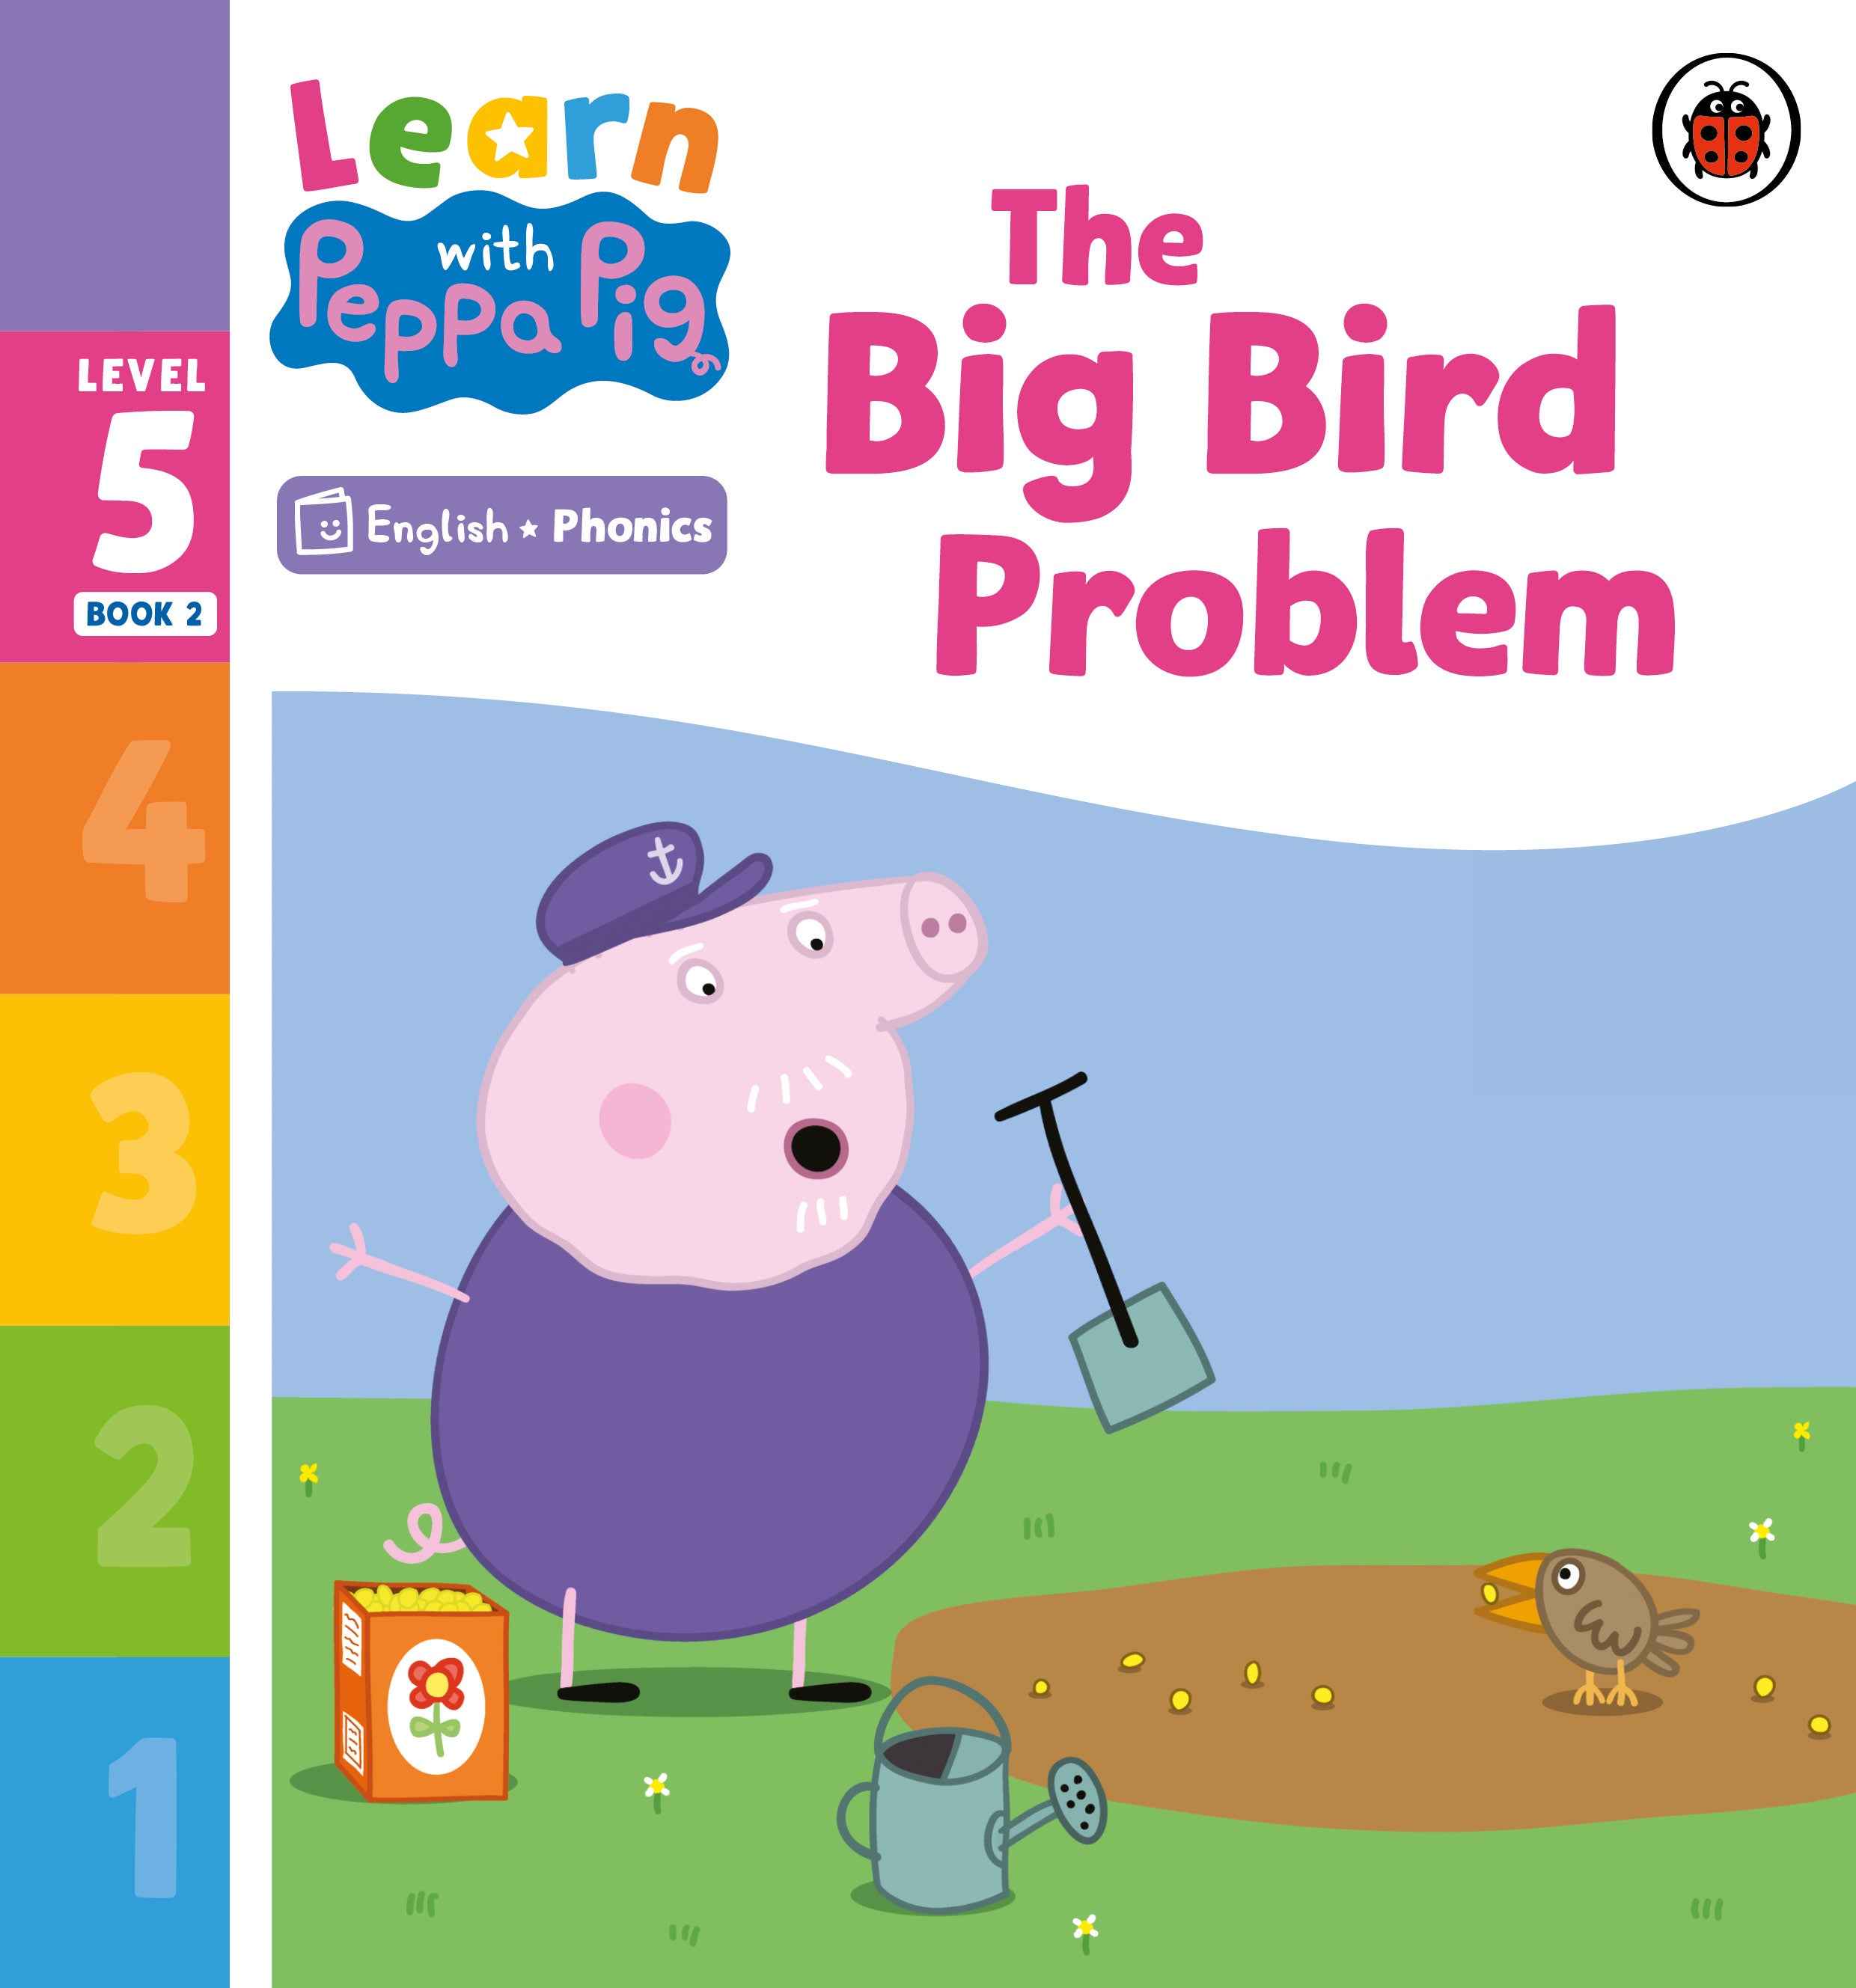 The Big Bird Problem